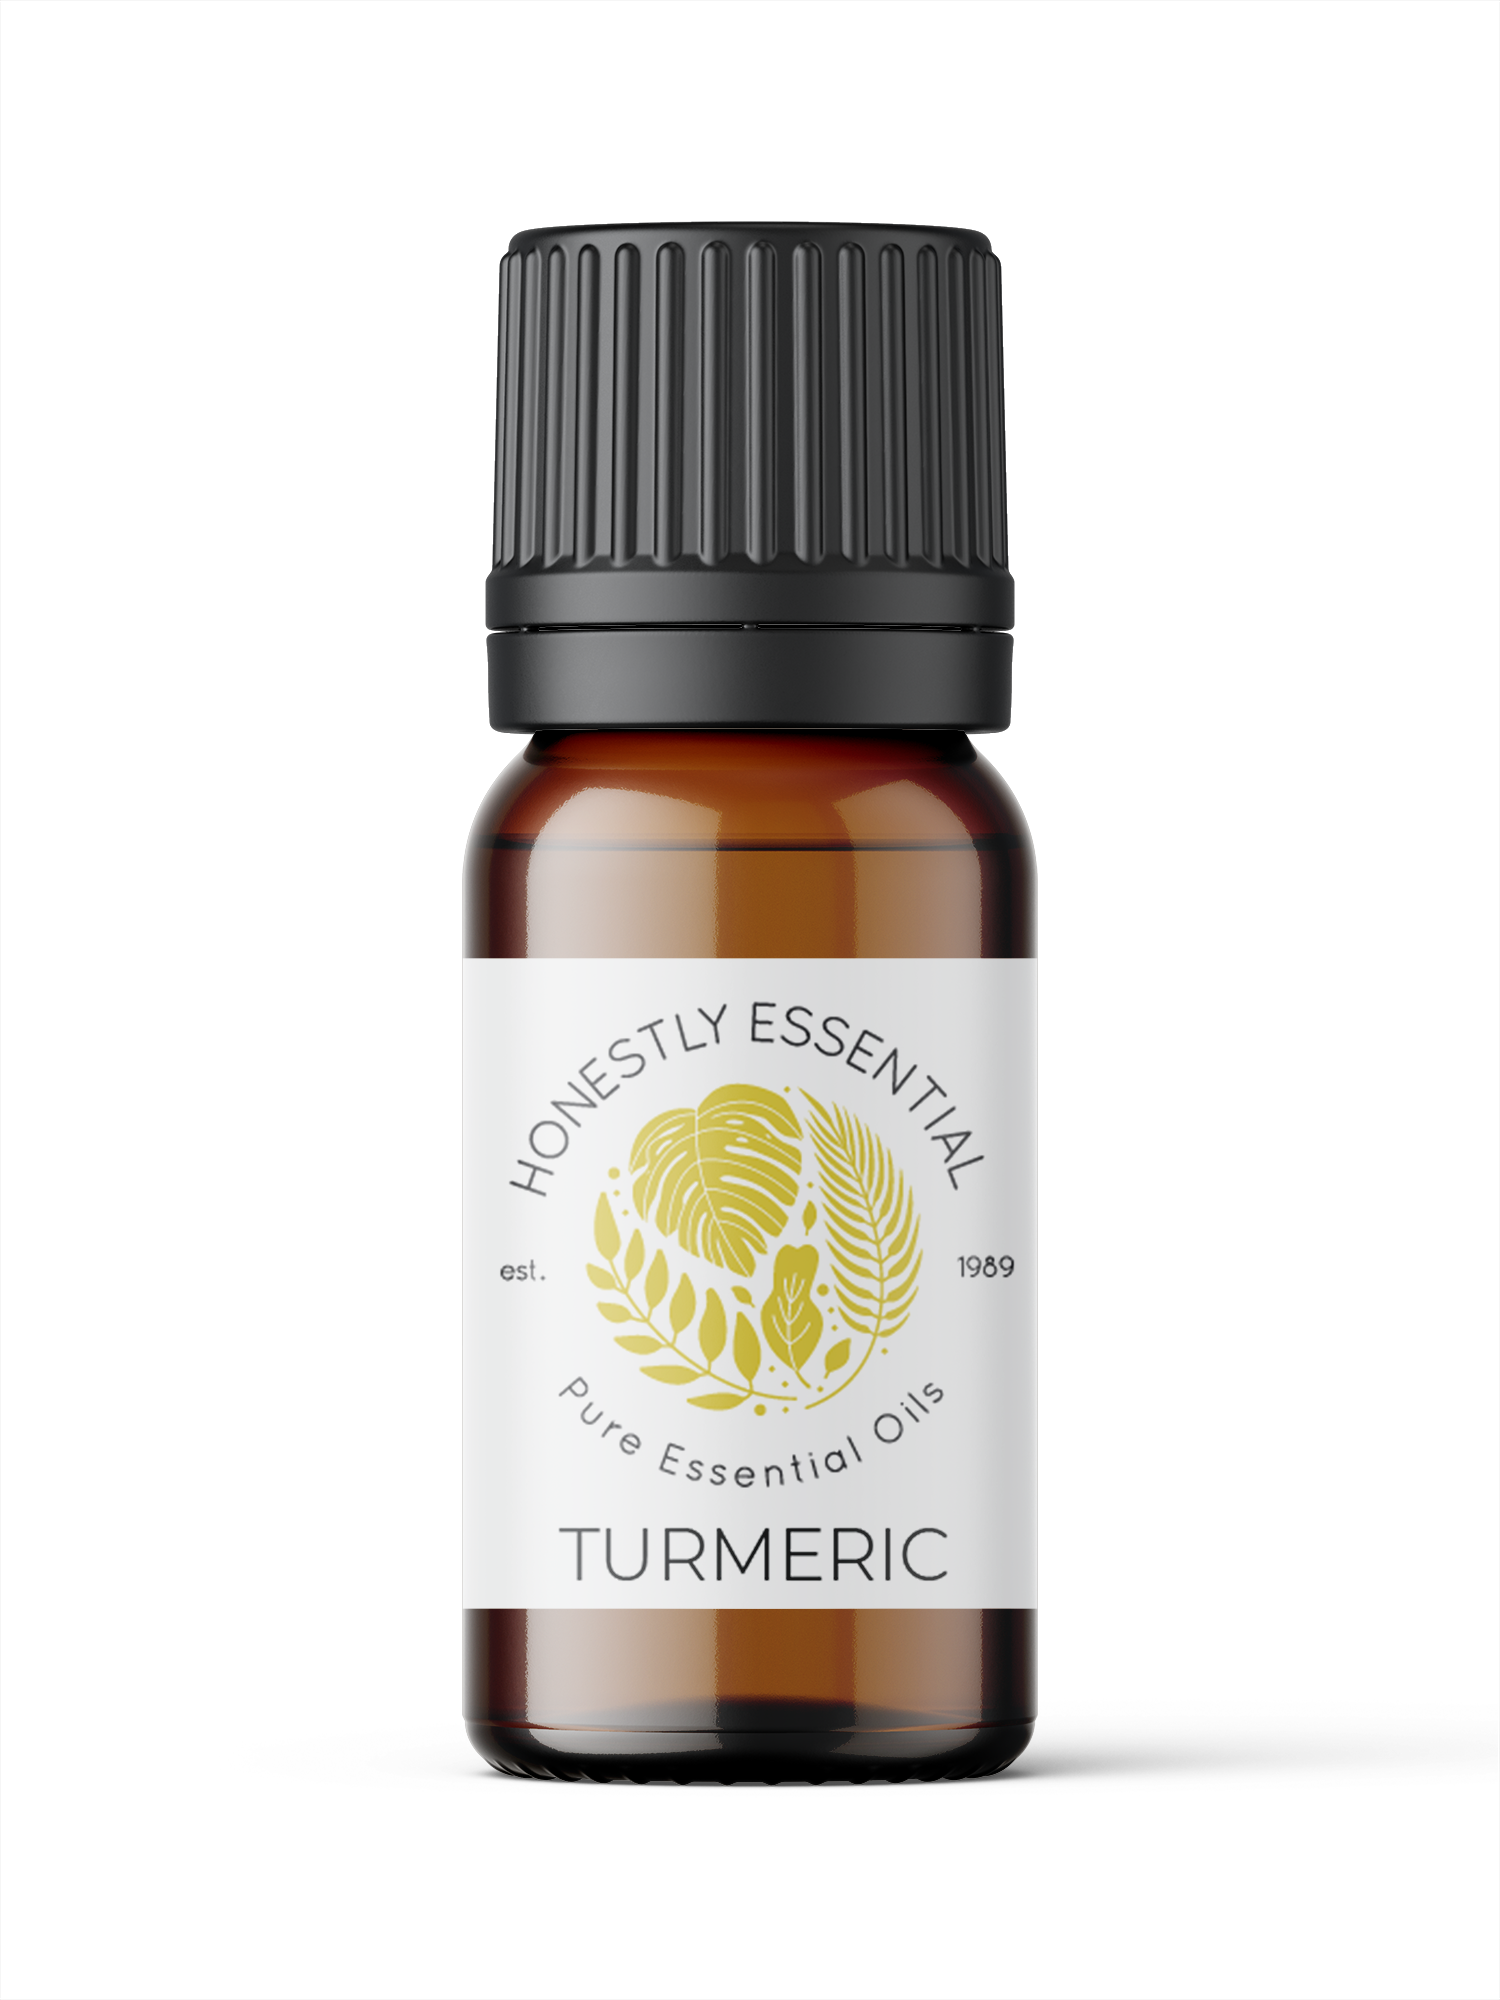 Turmeric Essential Oil - Essential Oils | Honestly Essential Oils bruising, child, digestion, essential, Immunity, kid, kid safe, kosher, oil, pain, pain reliever, safe, sores, turmeric, vega